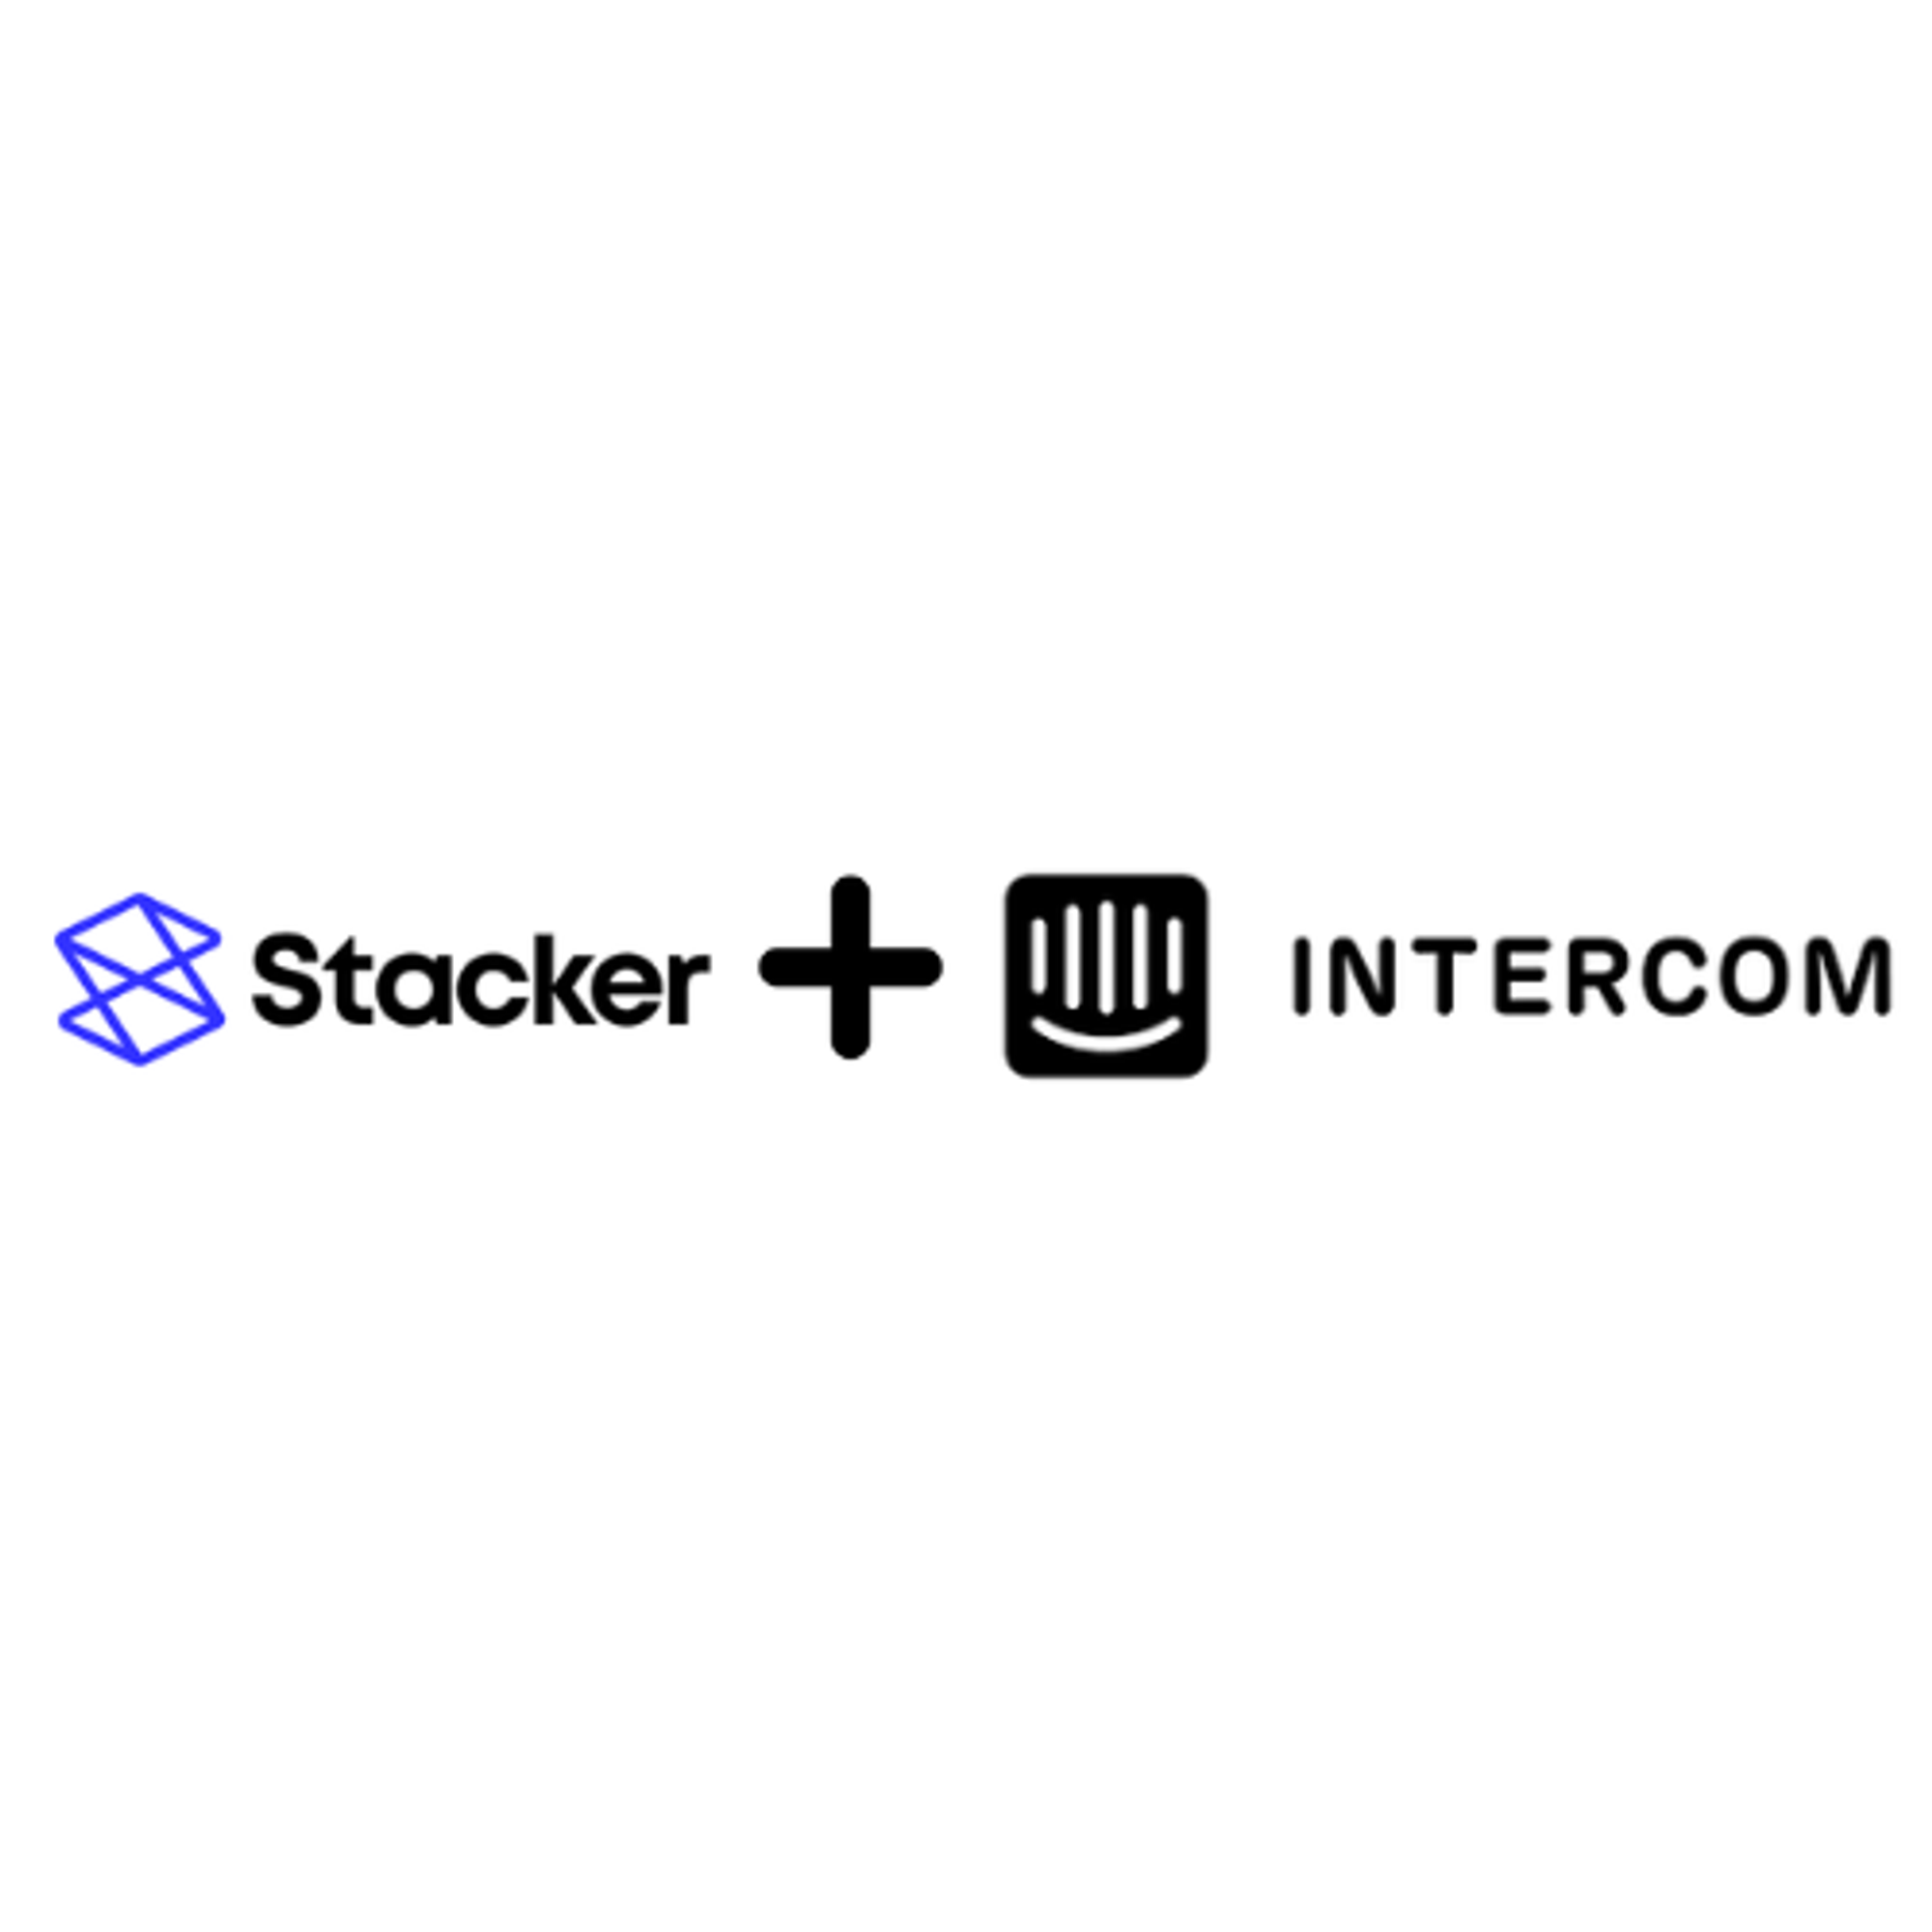 Stacker Chatbot using Intercom